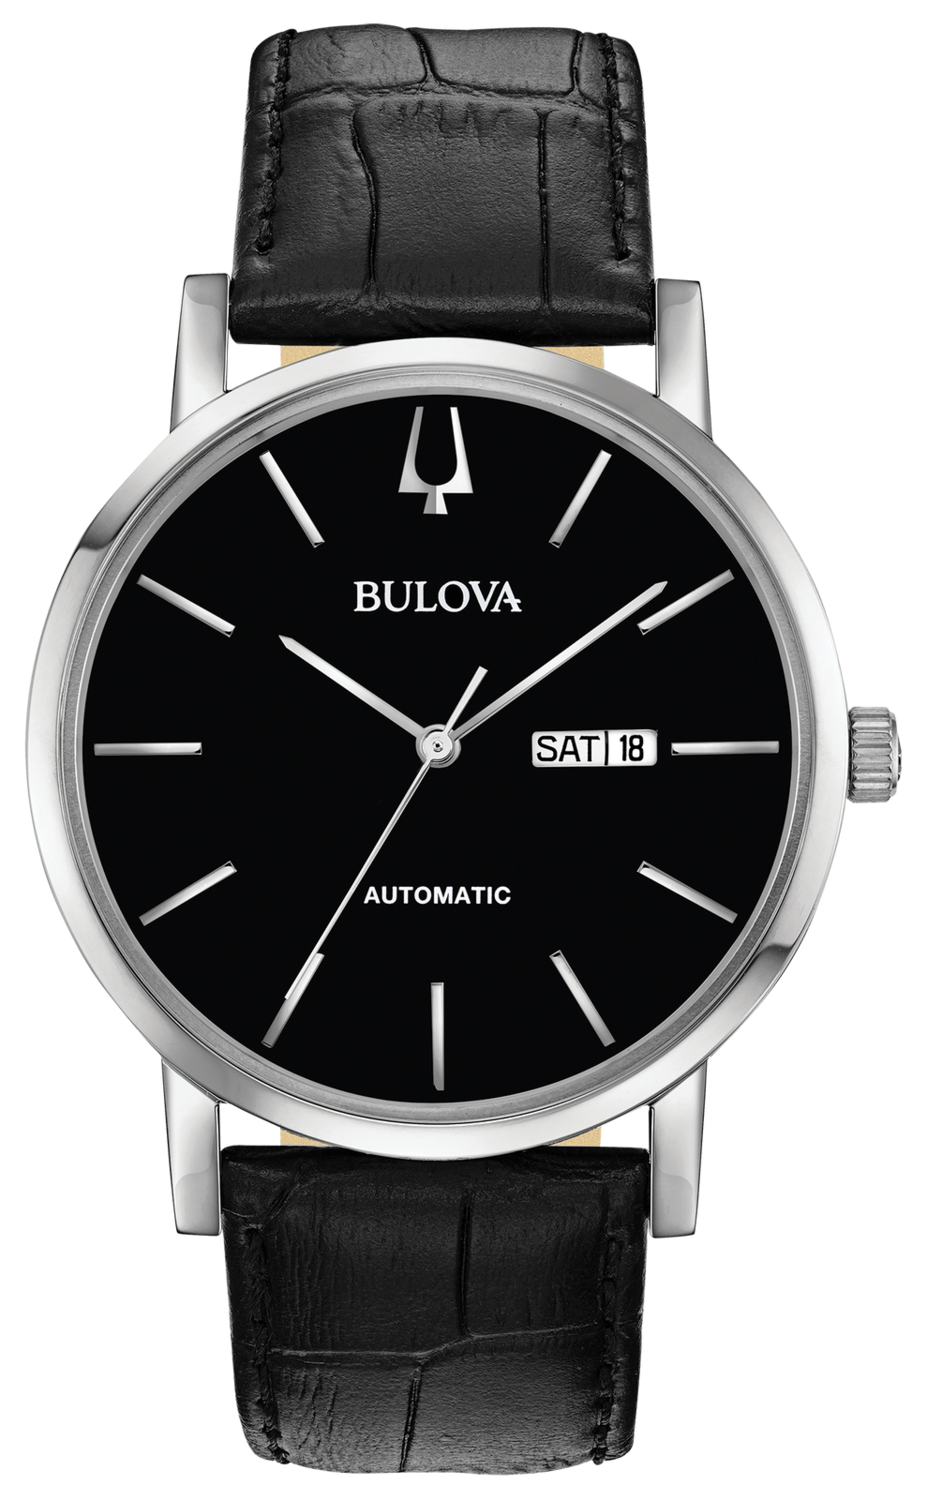 ​Reloj automático hombre Bulova American Clipper 96C131 42mm dial negro correa de cuero 30m WR